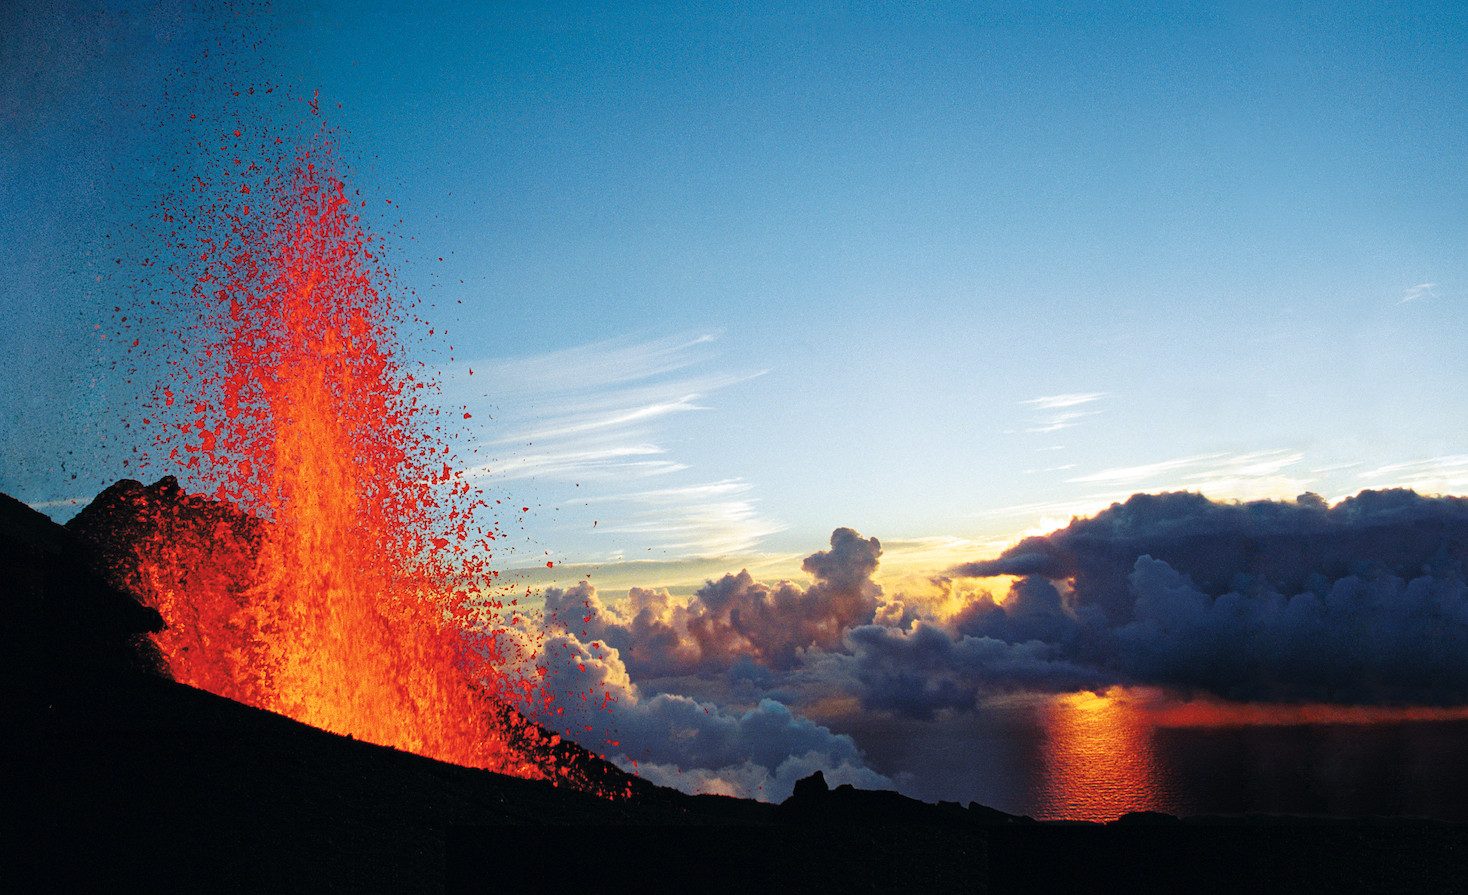 H θεαματική έκρηξη ηφαιστείου στη νήσο Ρεϊνιόν του Ινδικού ωκεανού [ΒΙΝΤΕΟ]